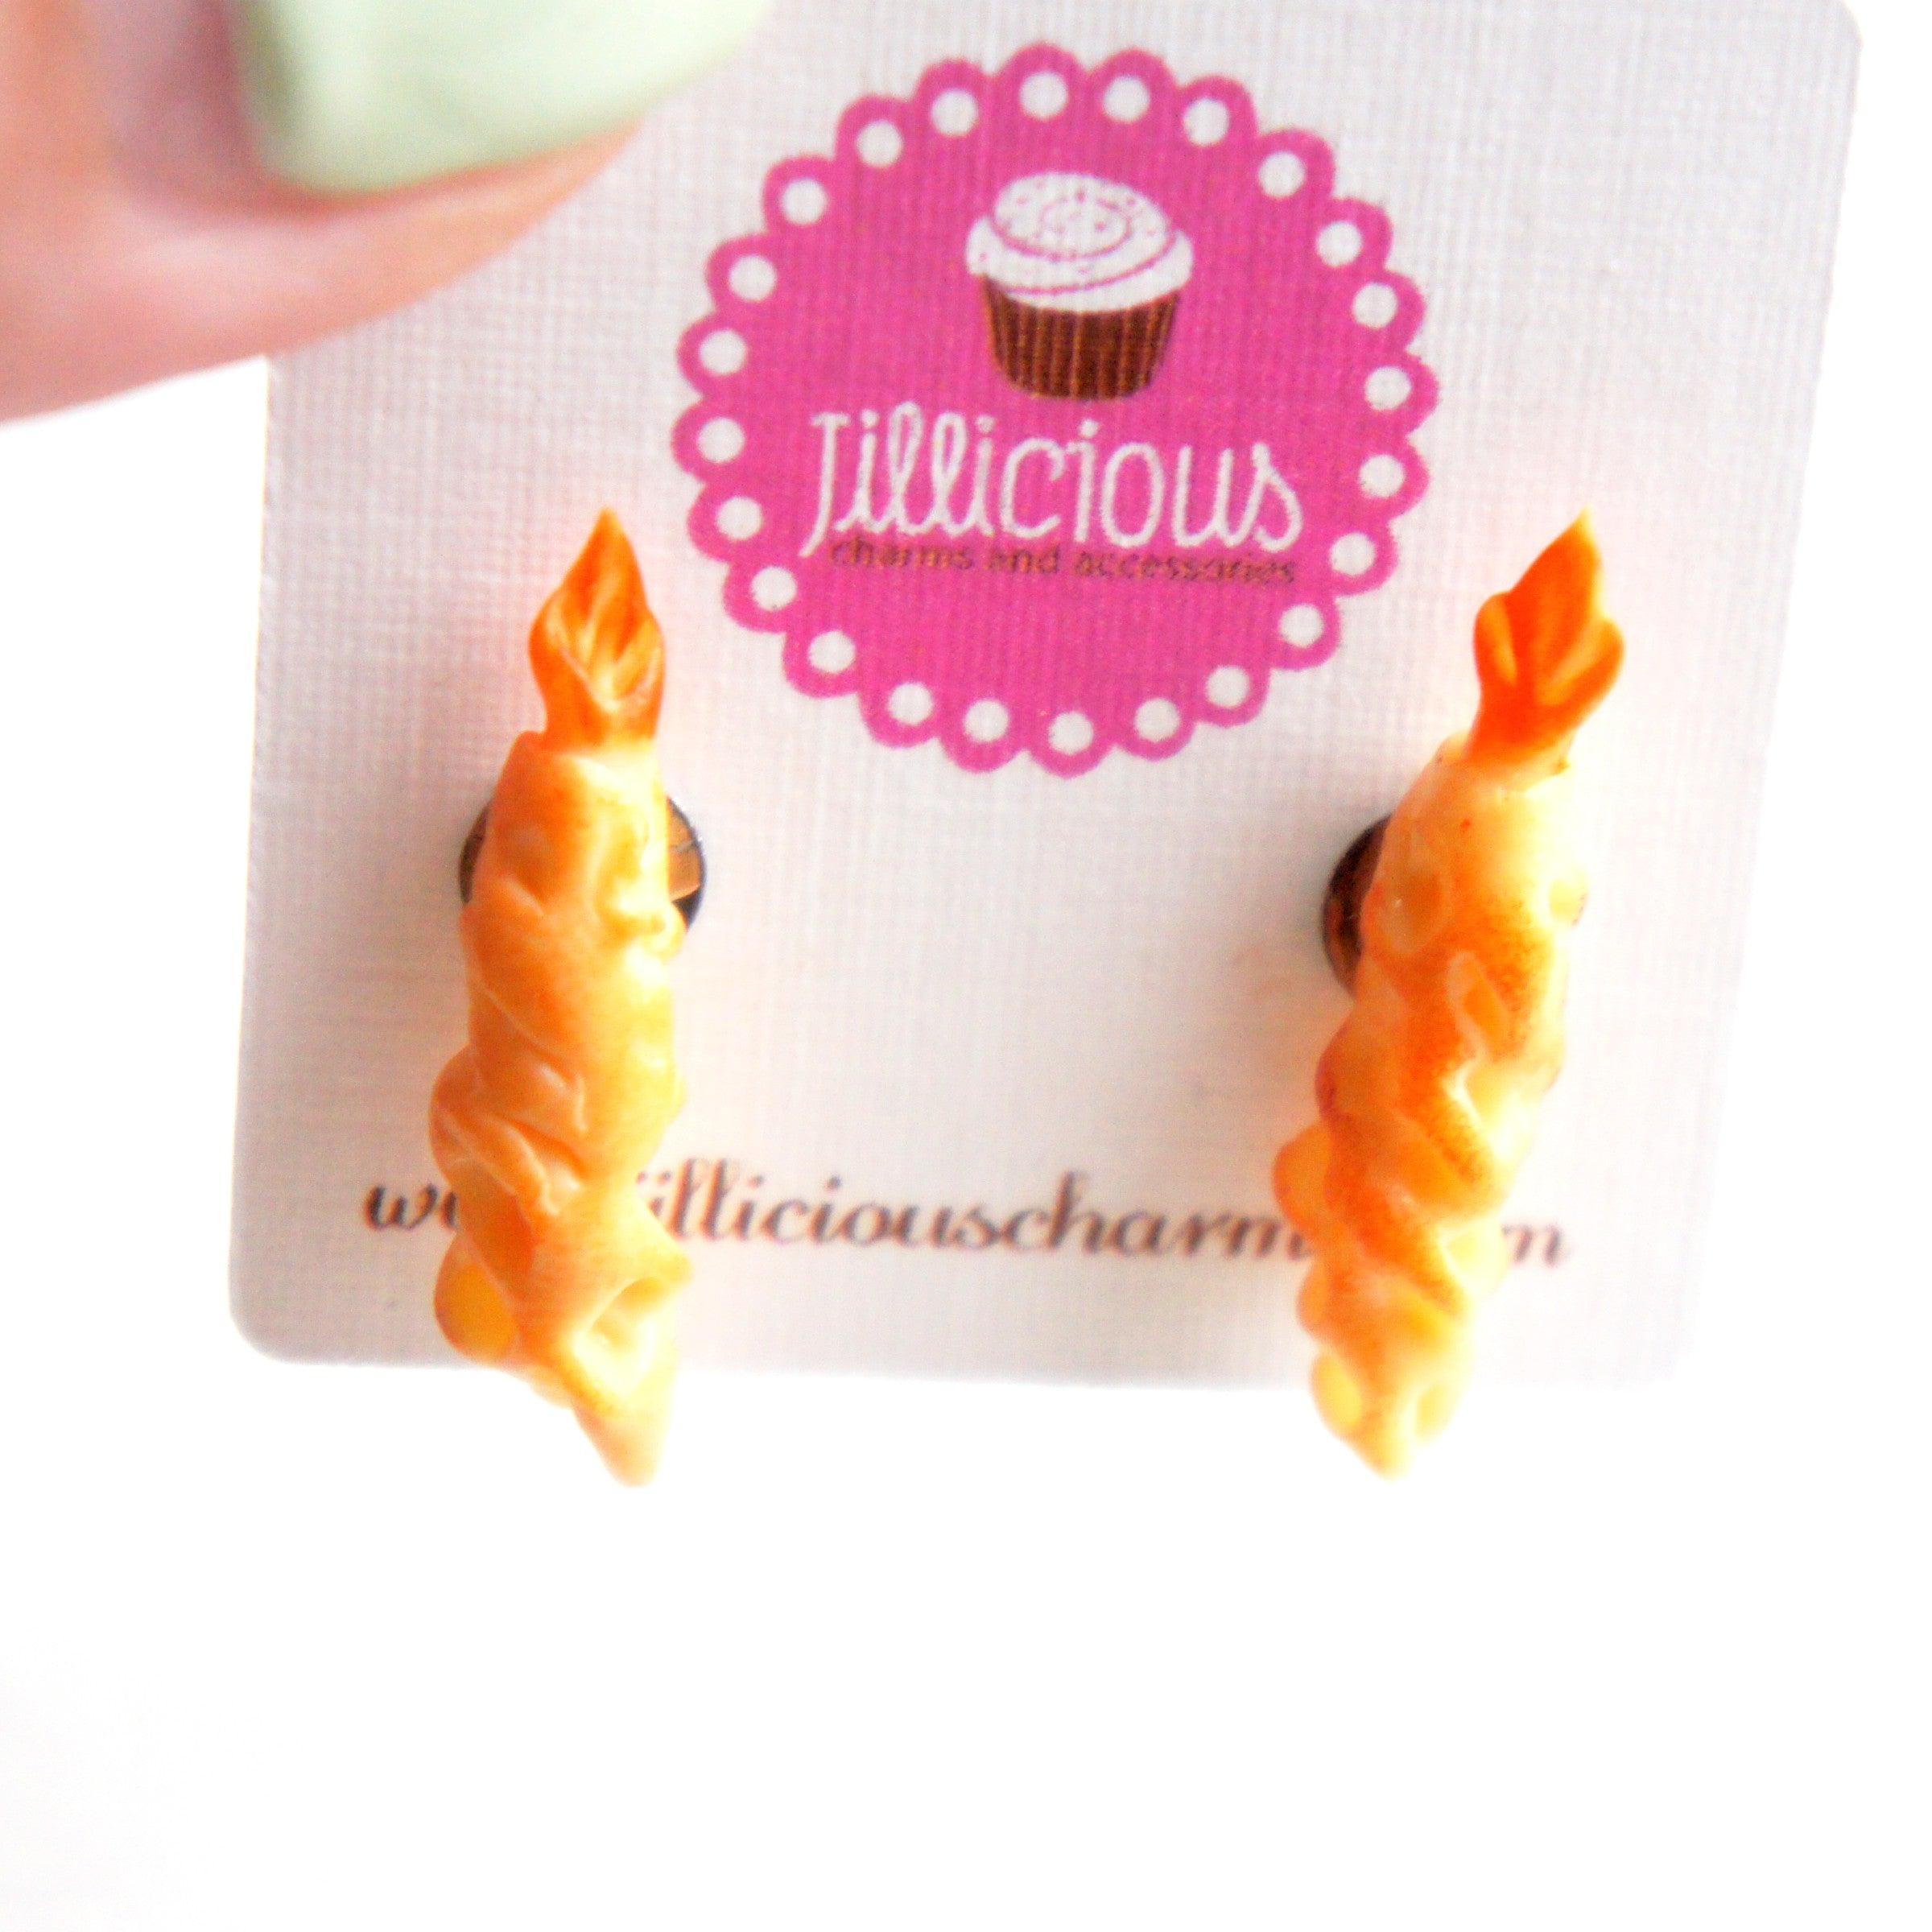 Shrimp Tempura Stud Earrings - Jillicious charms and accessories